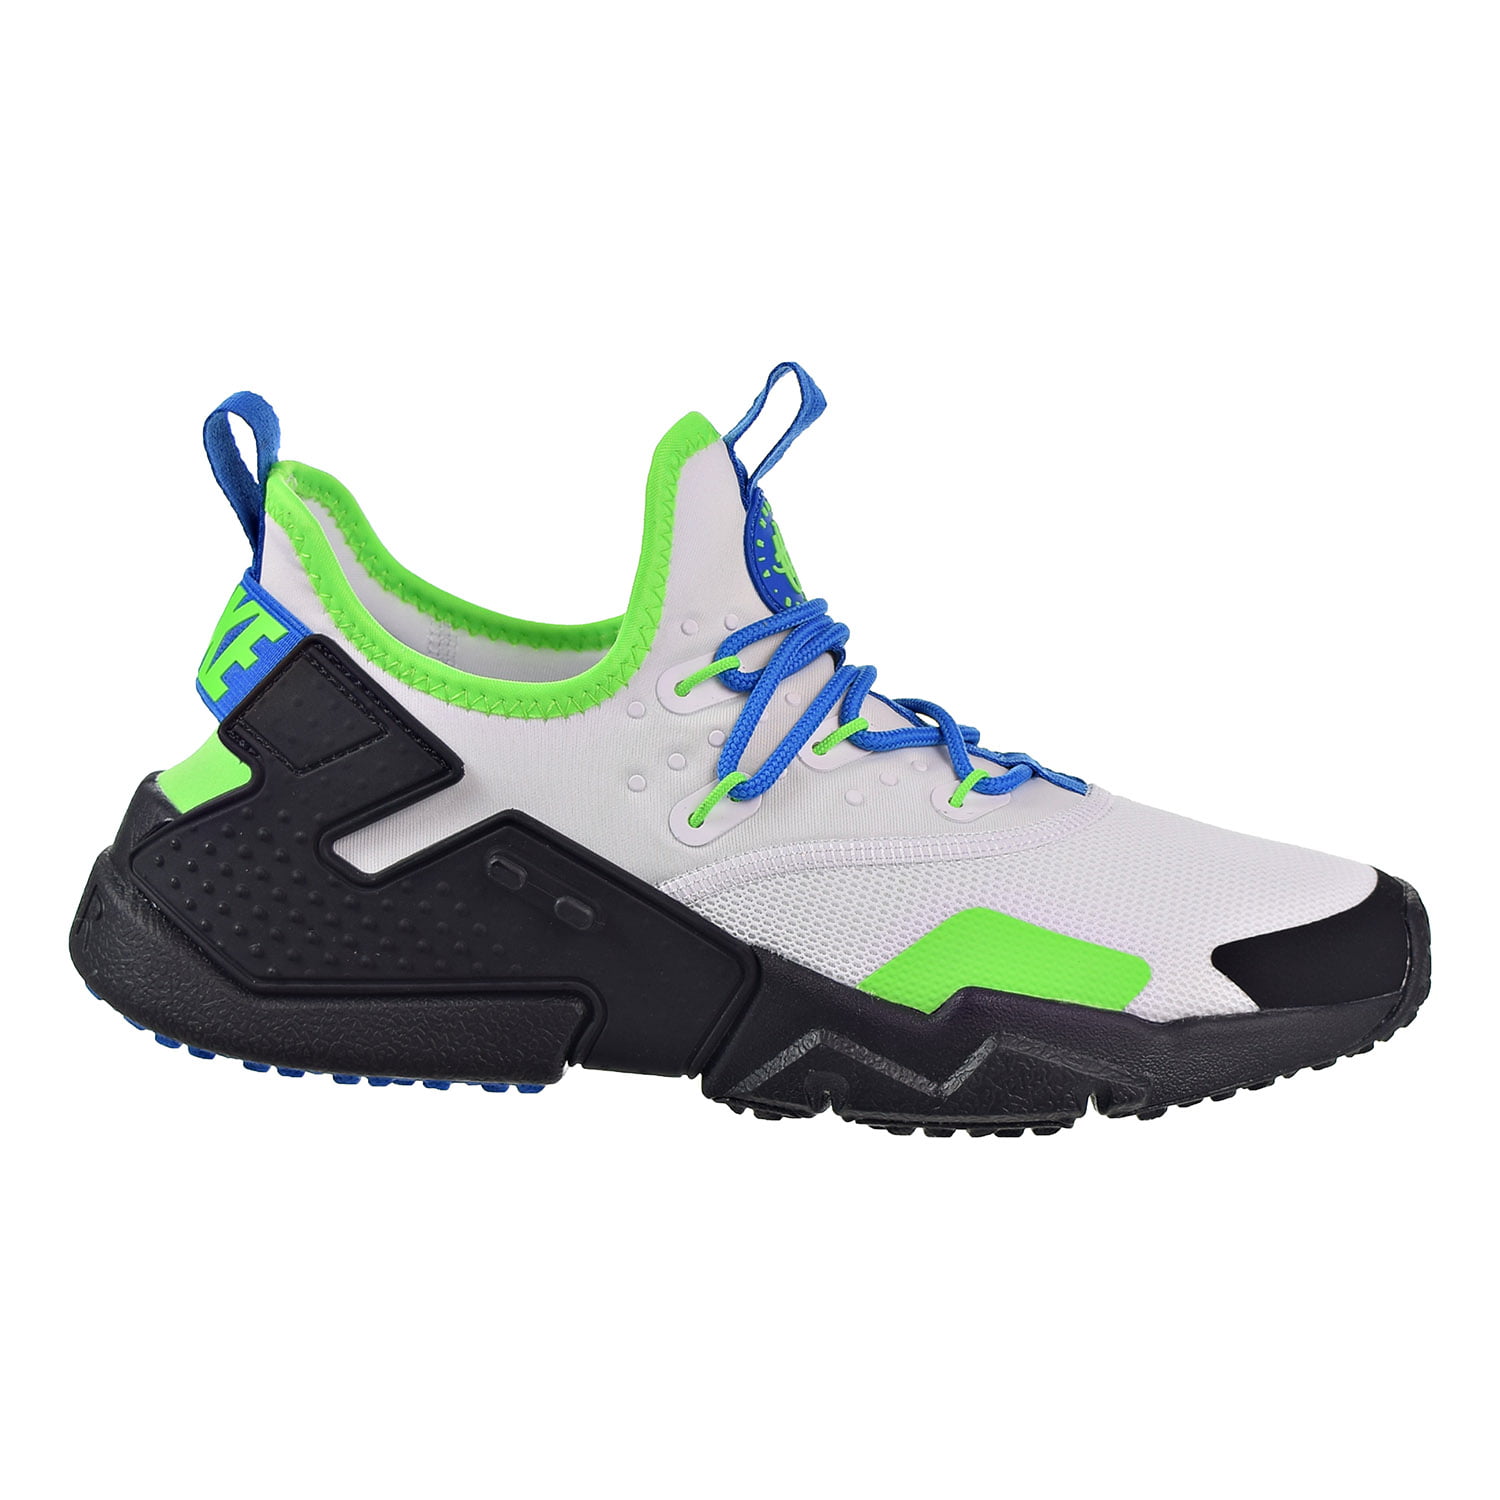 Nike Nike Air Huarache Drift Men S Shoes White Black Blue Nebula Ah7334 102 Walmart Com Walmart Com